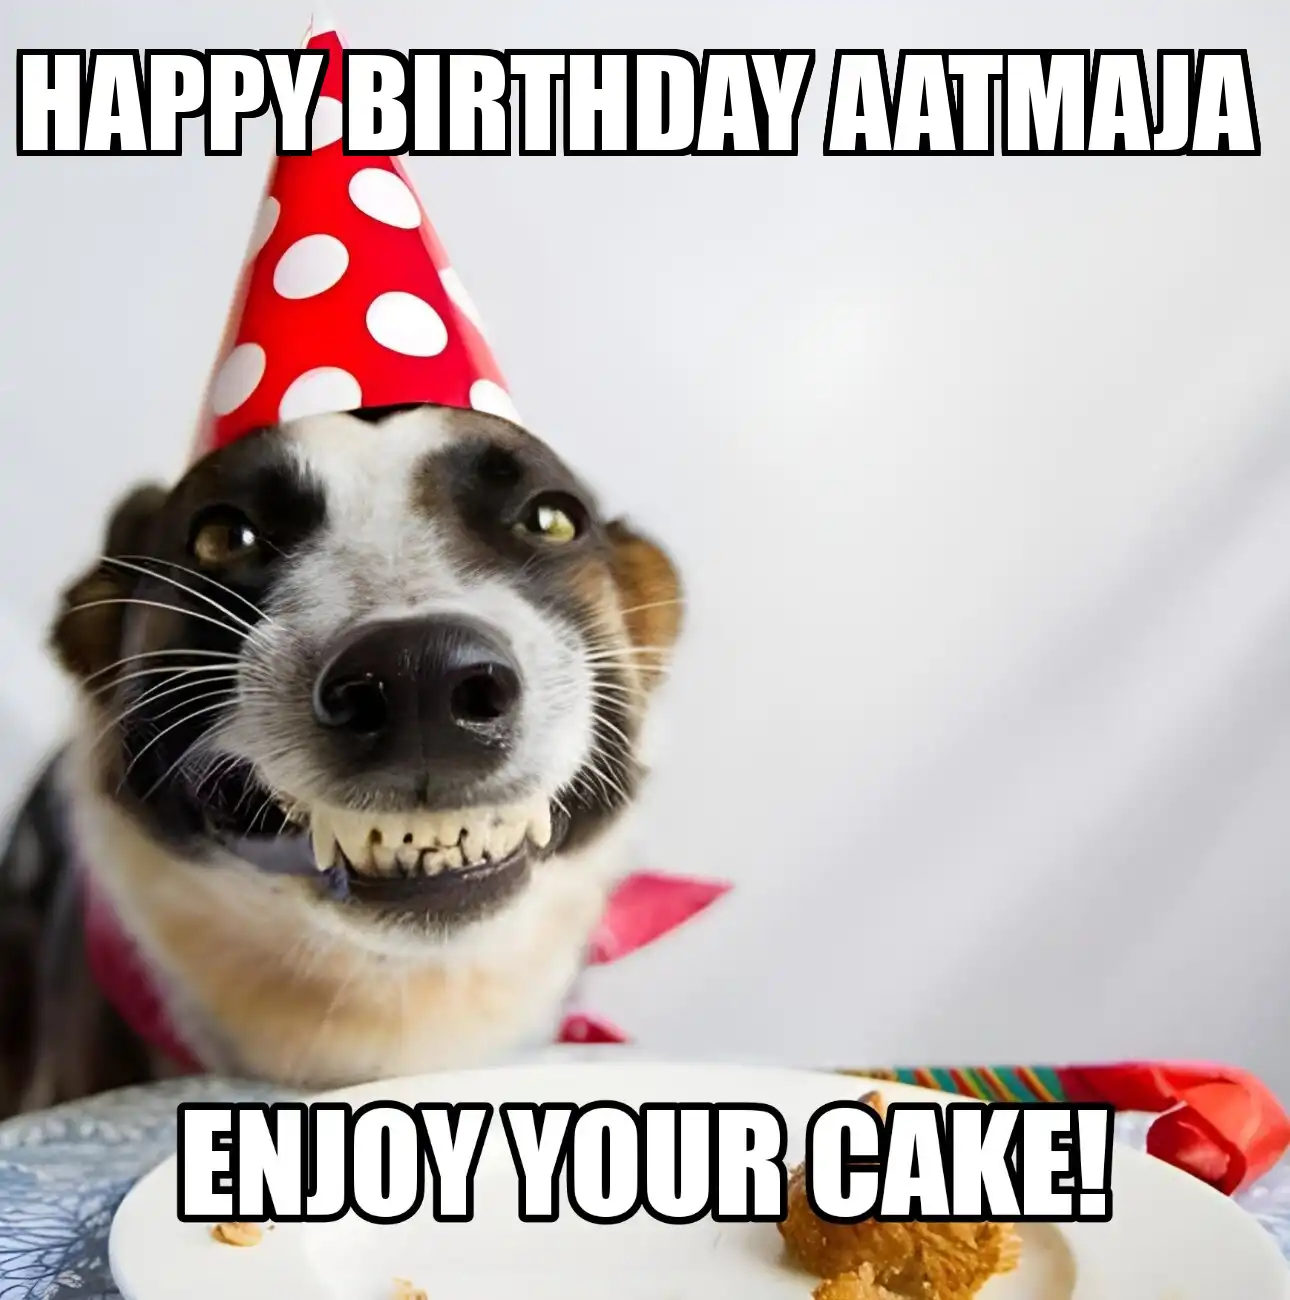 Happy Birthday Aatmaja Enjoy Your Cake Dog Meme